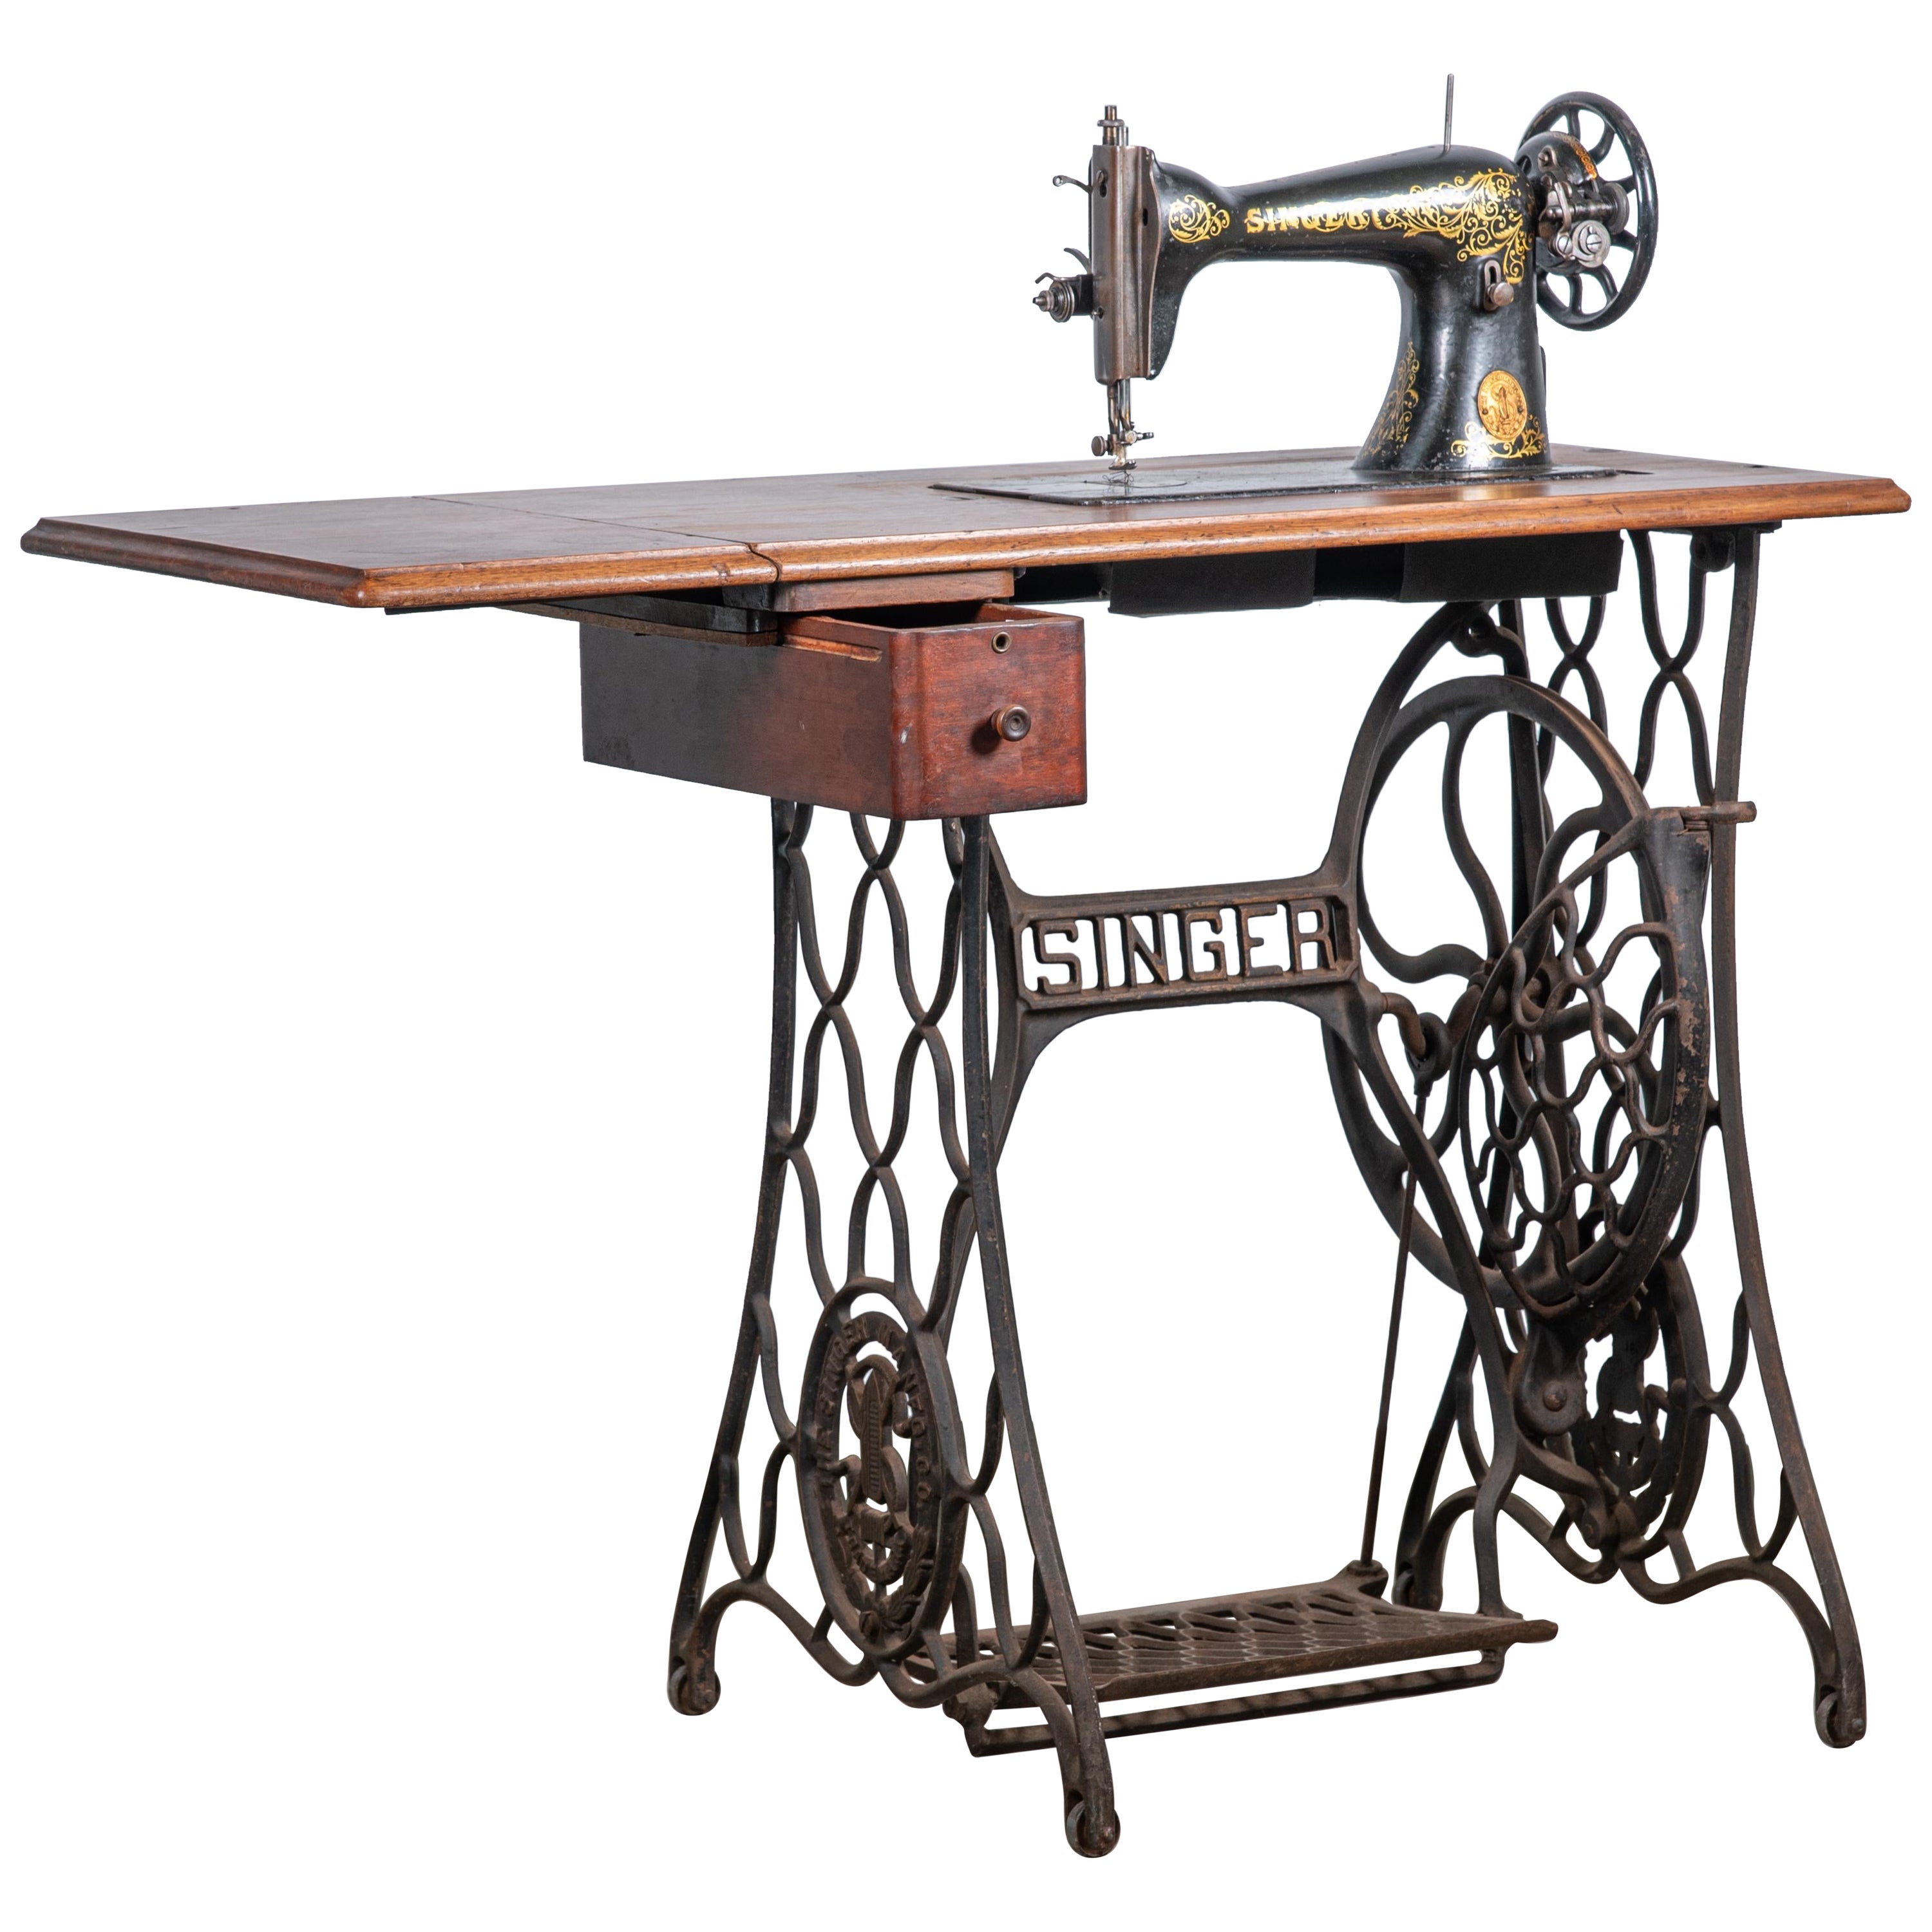 19th Century Singer Sewing Machine